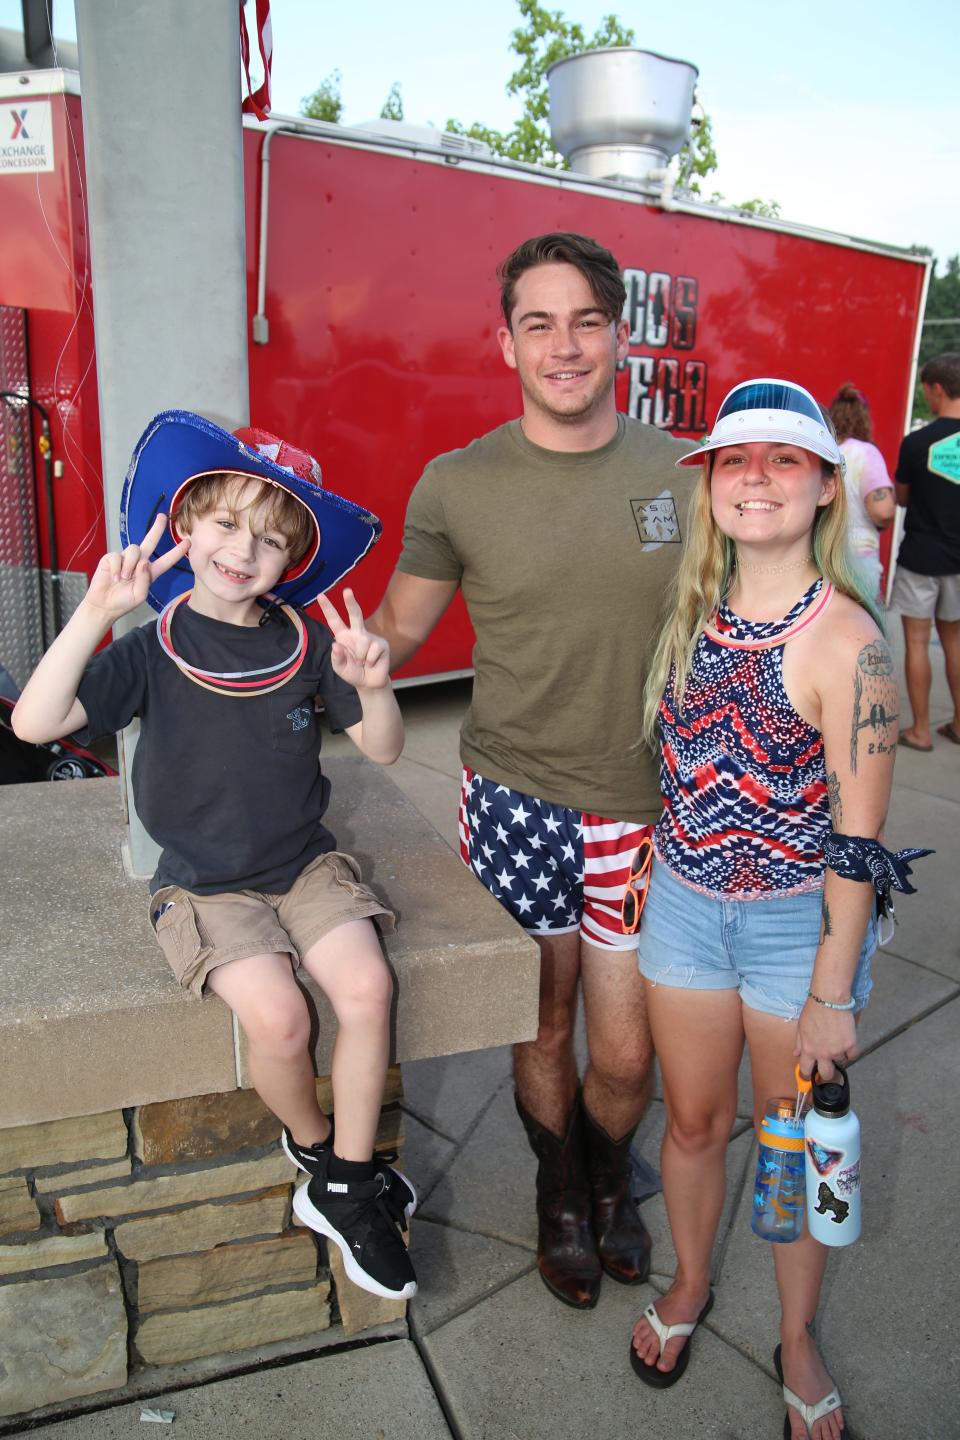 Declan Wright, Jordan Koury and Alyssa Nyilas having fun at Clarksville's Independence Day celebration.